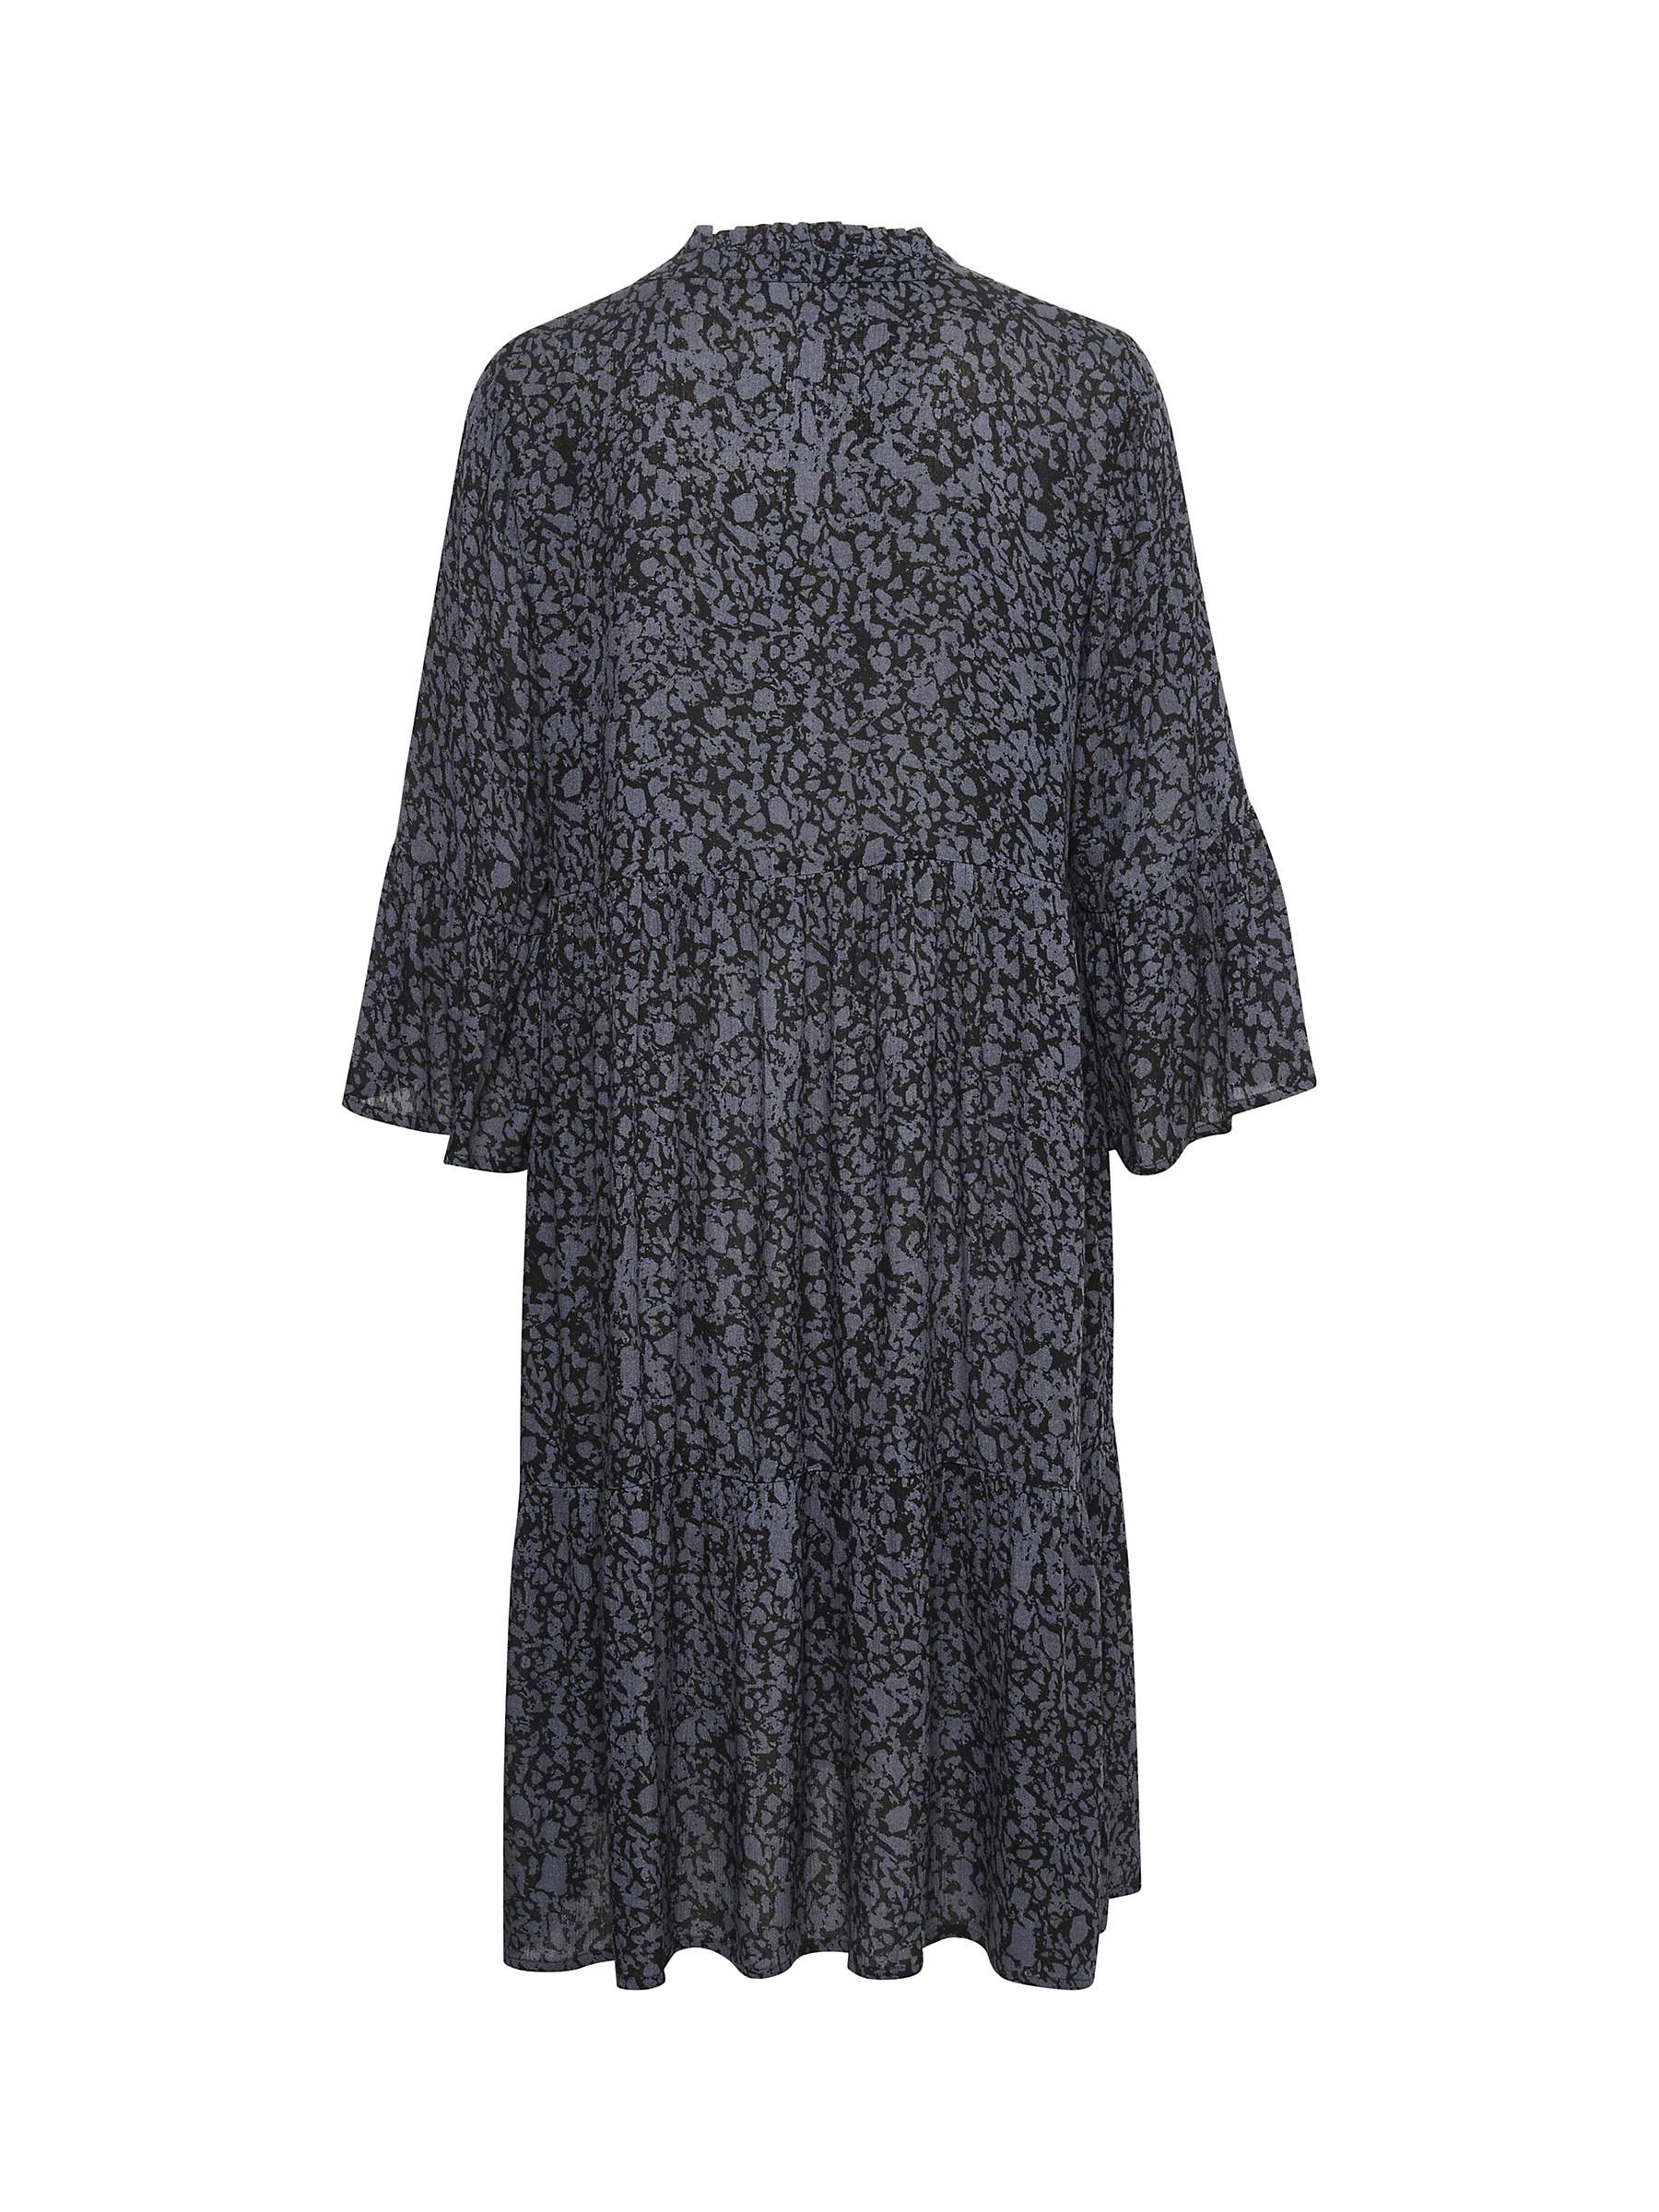 Buy KAFFE Edita Amber Tiered Dress, Black/Midnight Online at johnlewis.com